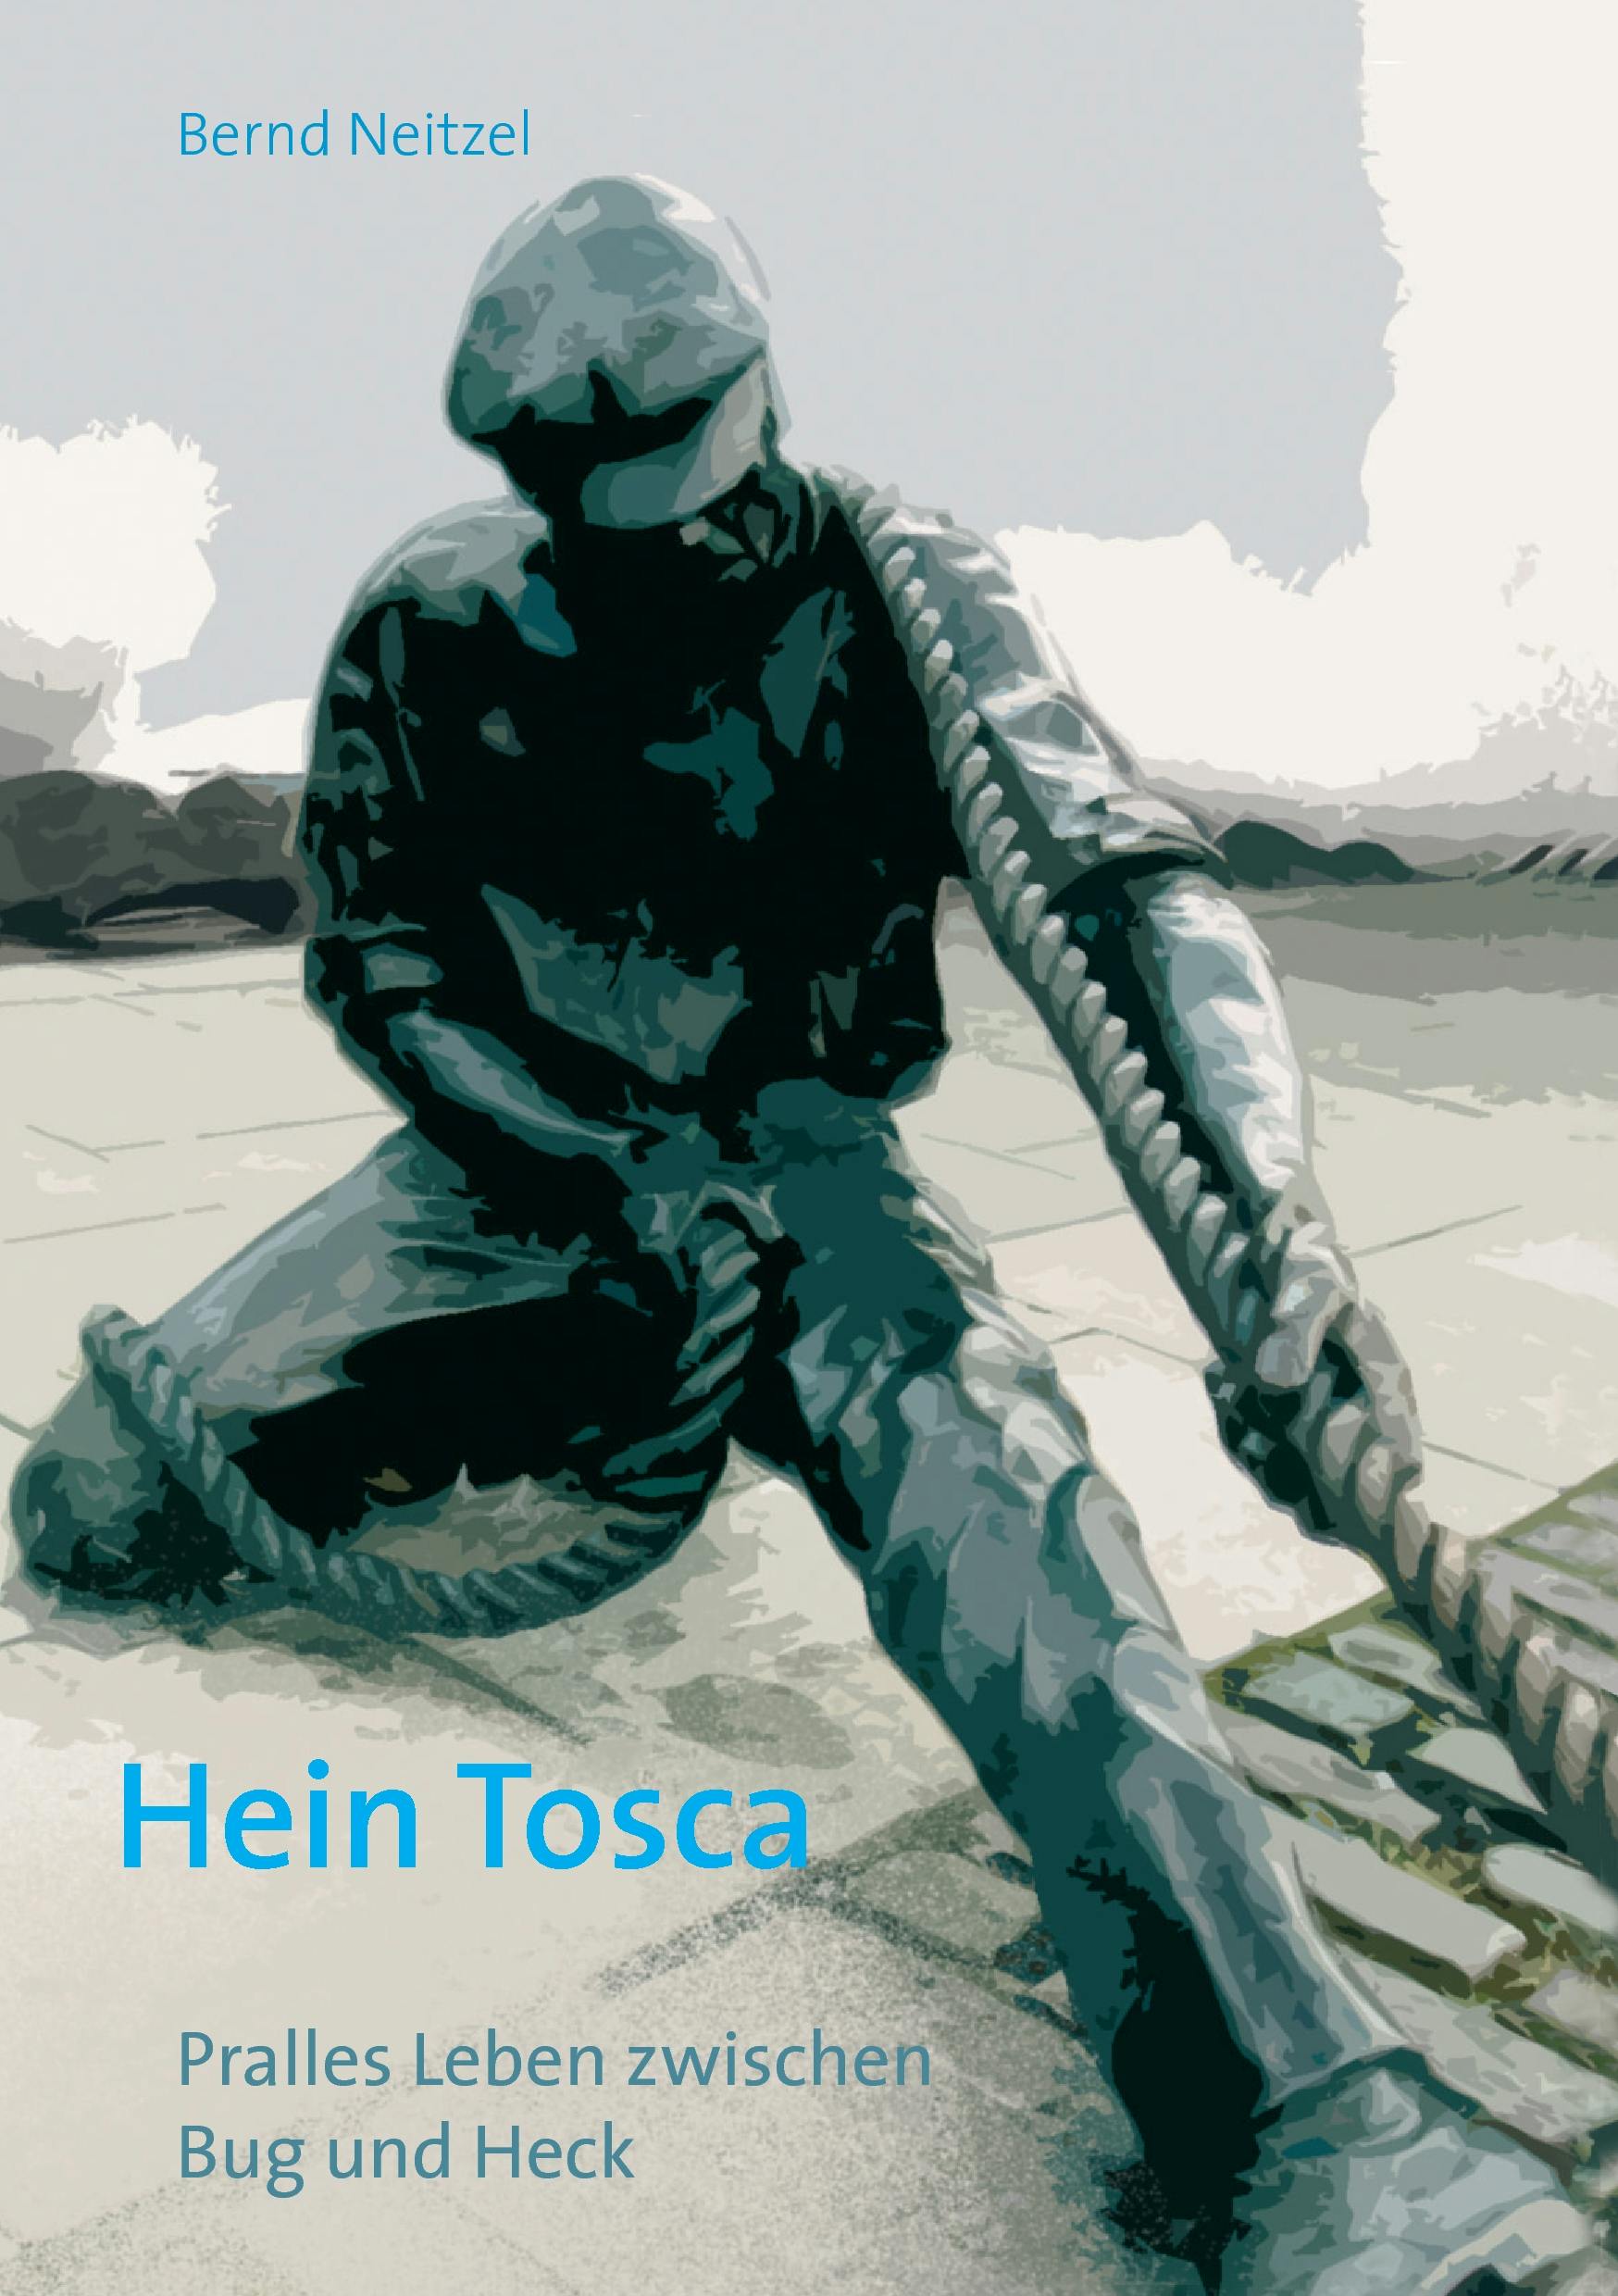 Hein Tosca - Bernd Neitzel